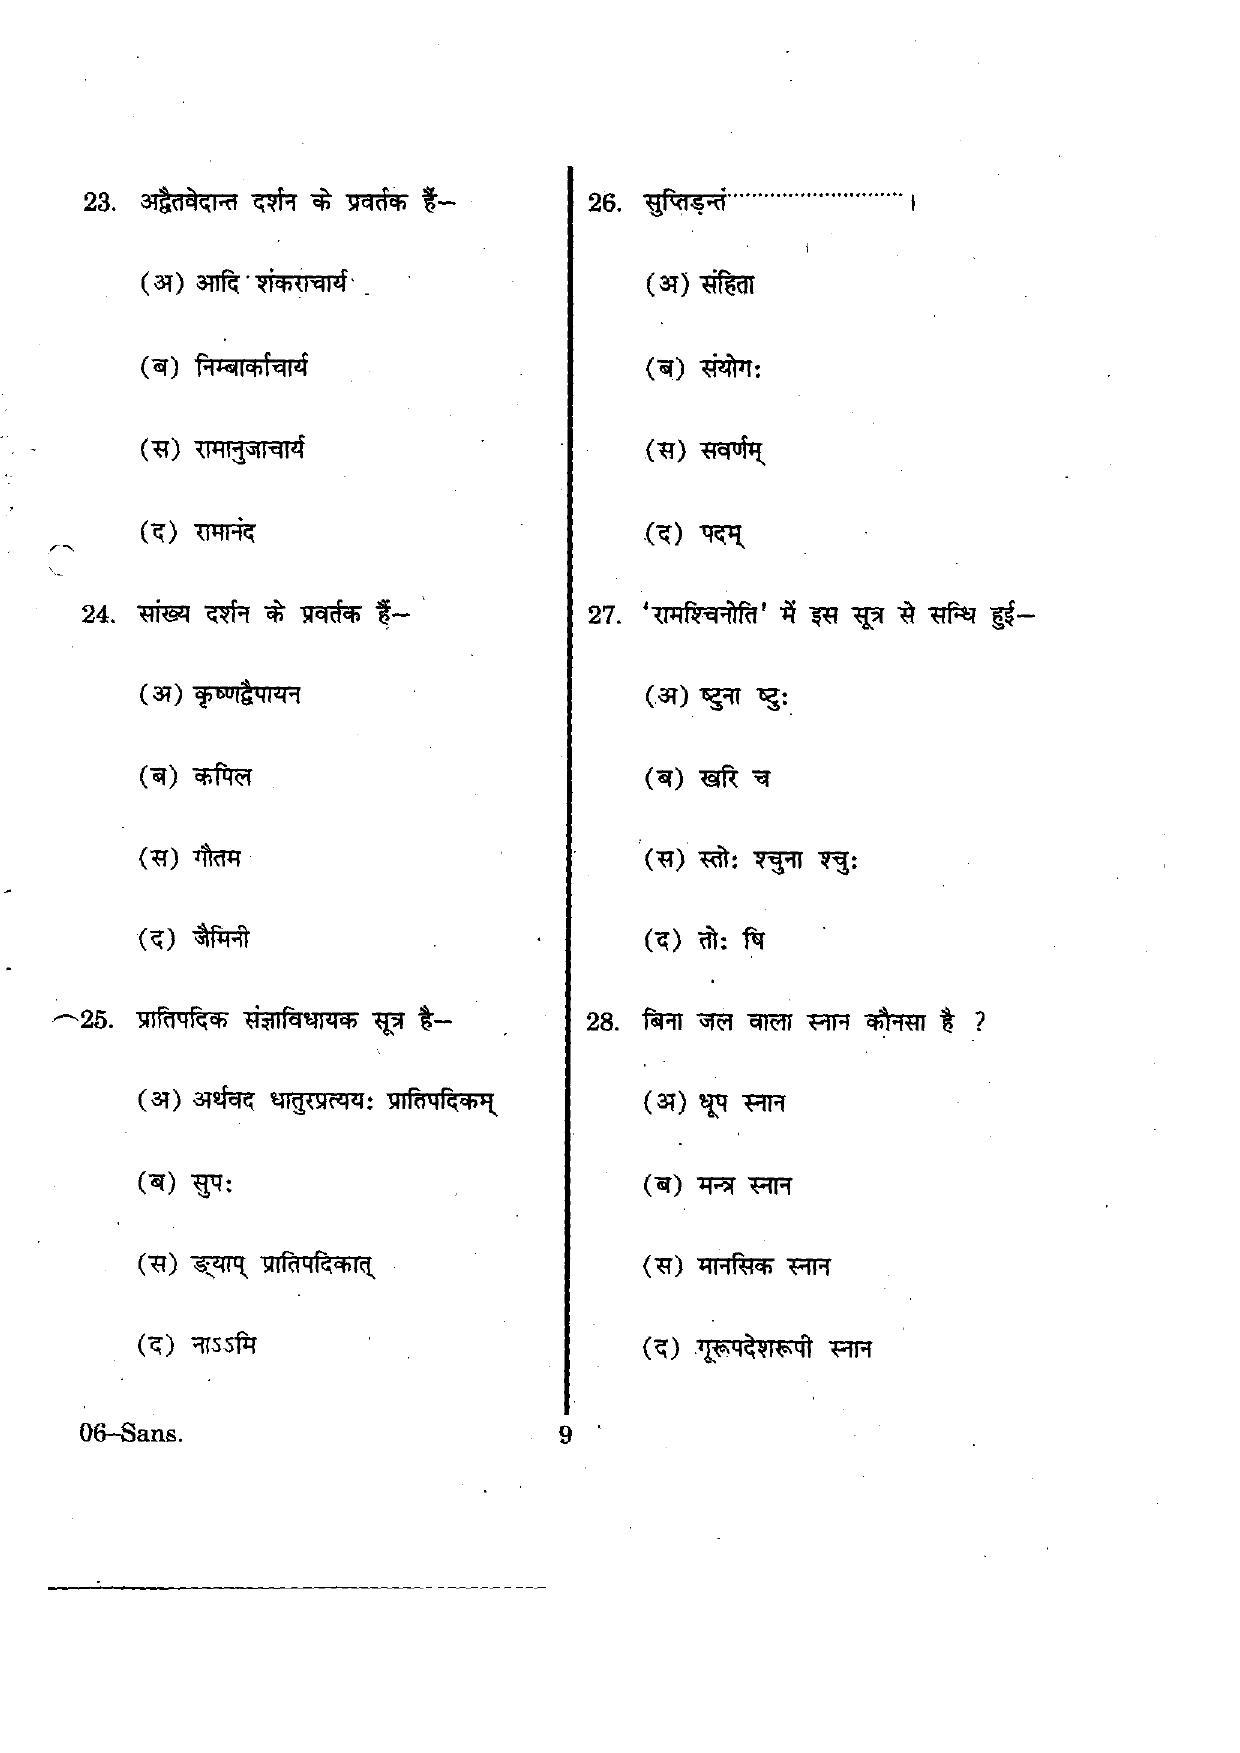 URATPG Sanskrit 2012 Question Paper - Page 9